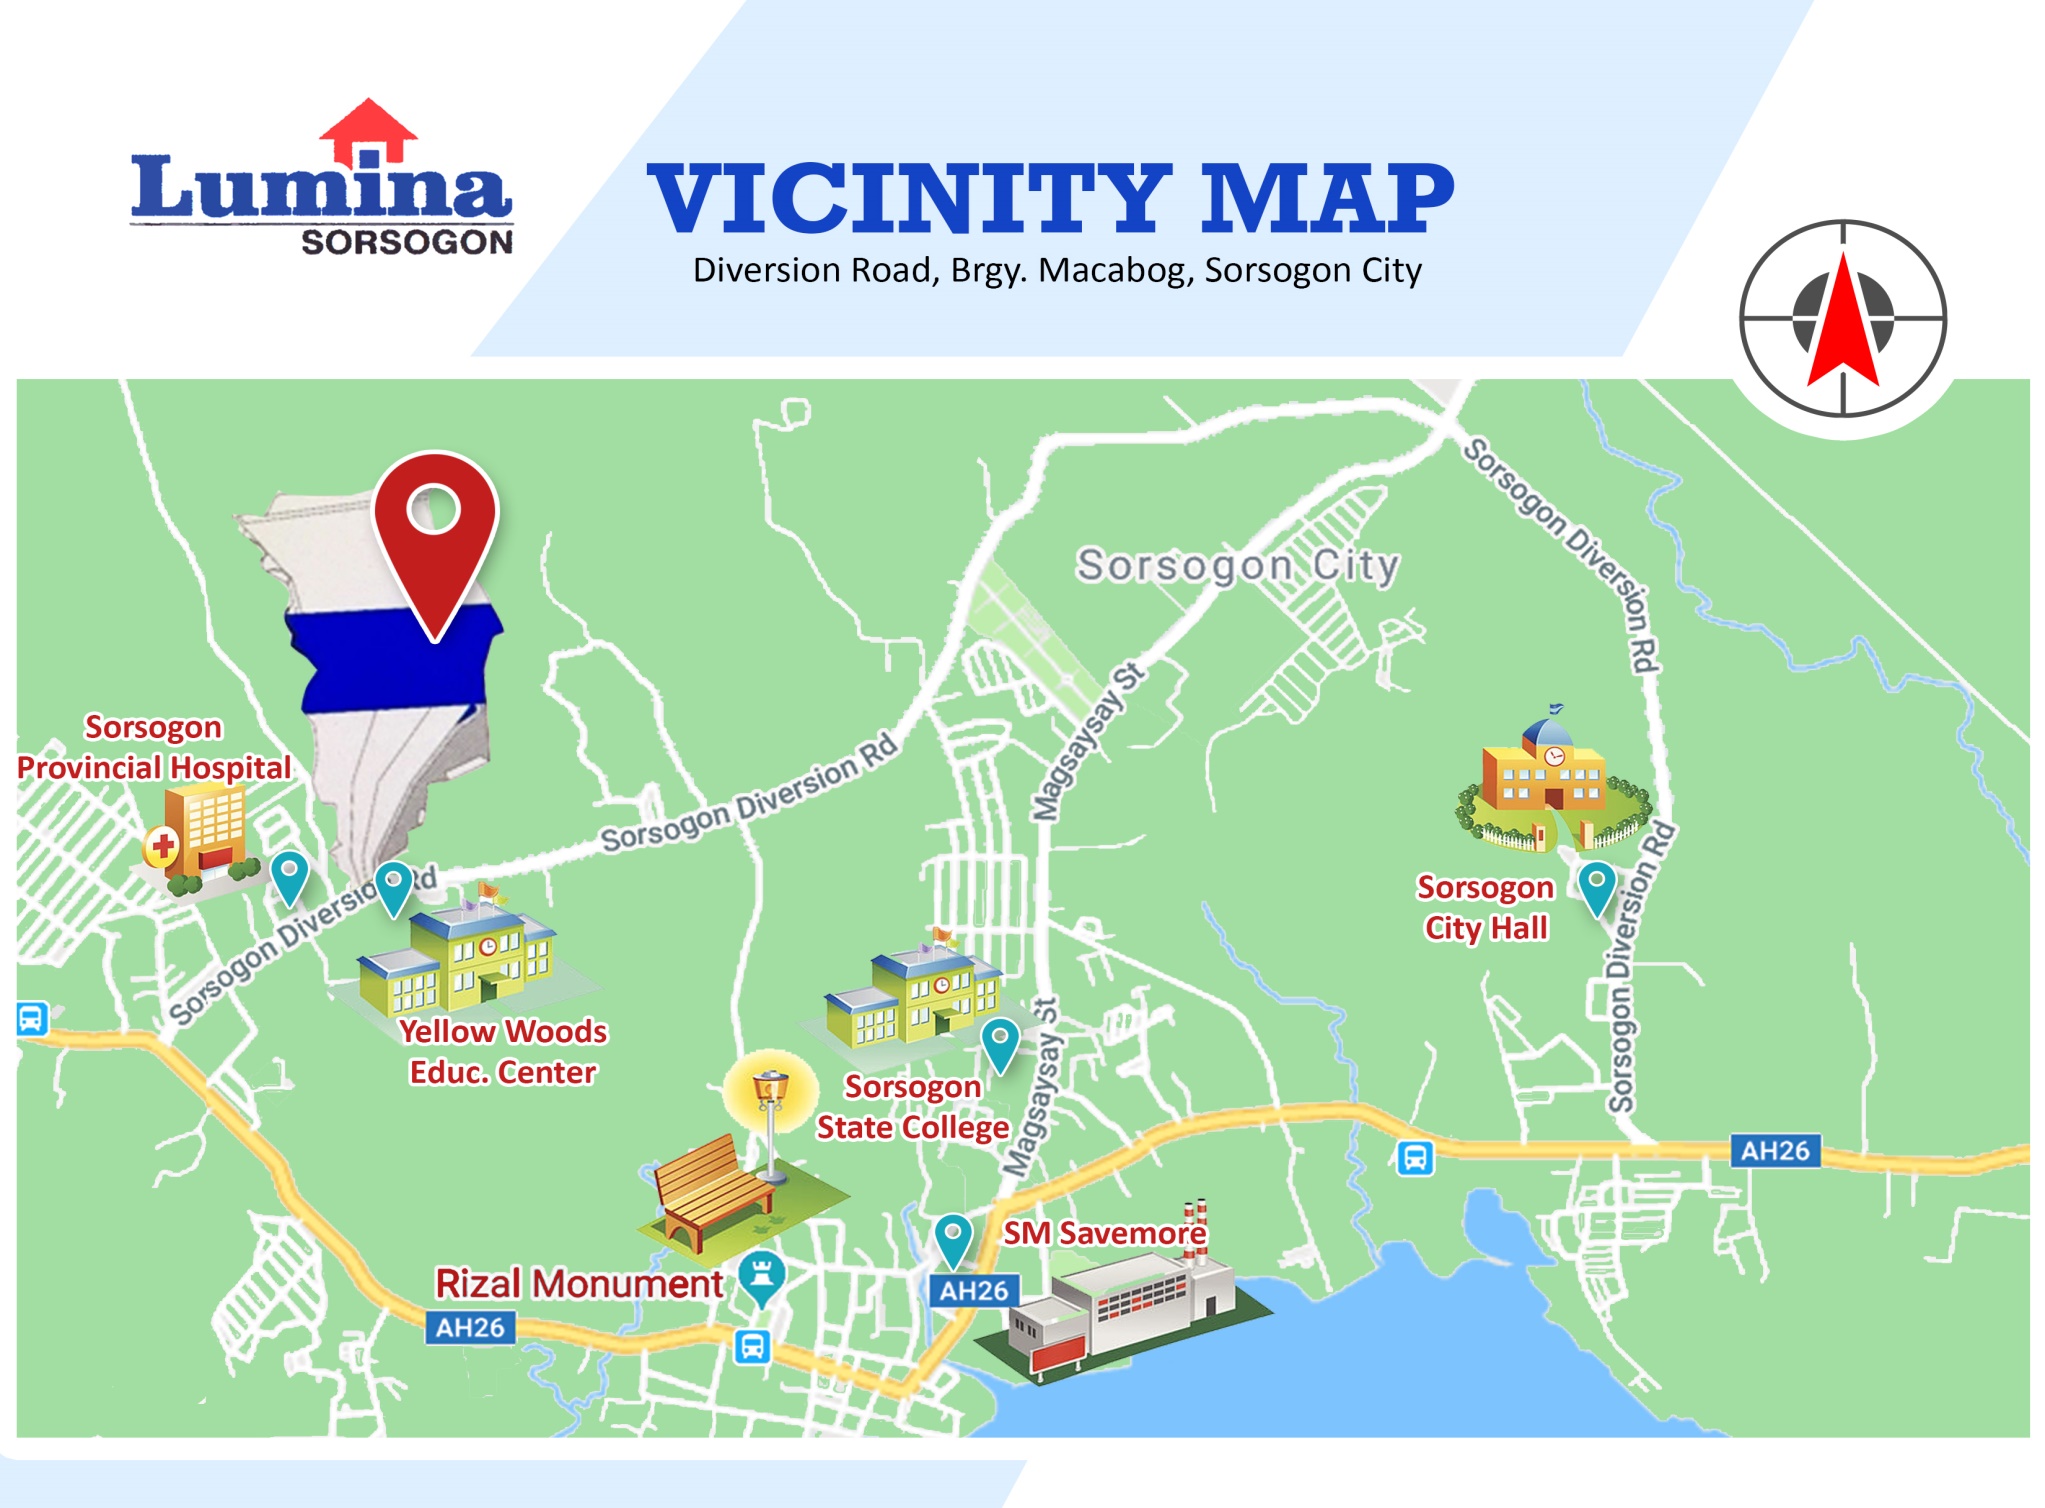 Vicinity-Map-sorsogon.jpeg